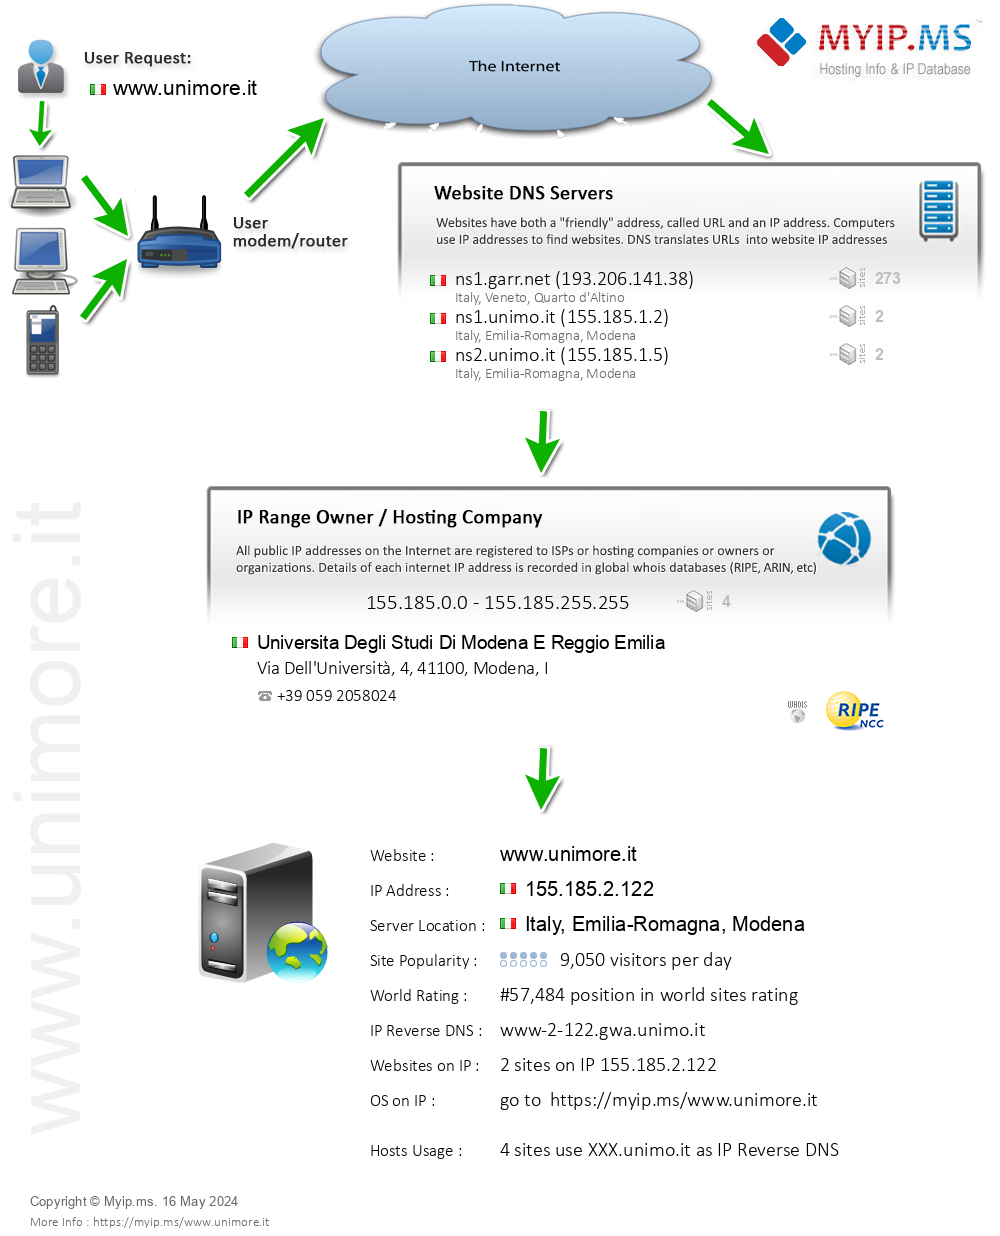 Unimore.it - Website Hosting Visual IP Diagram